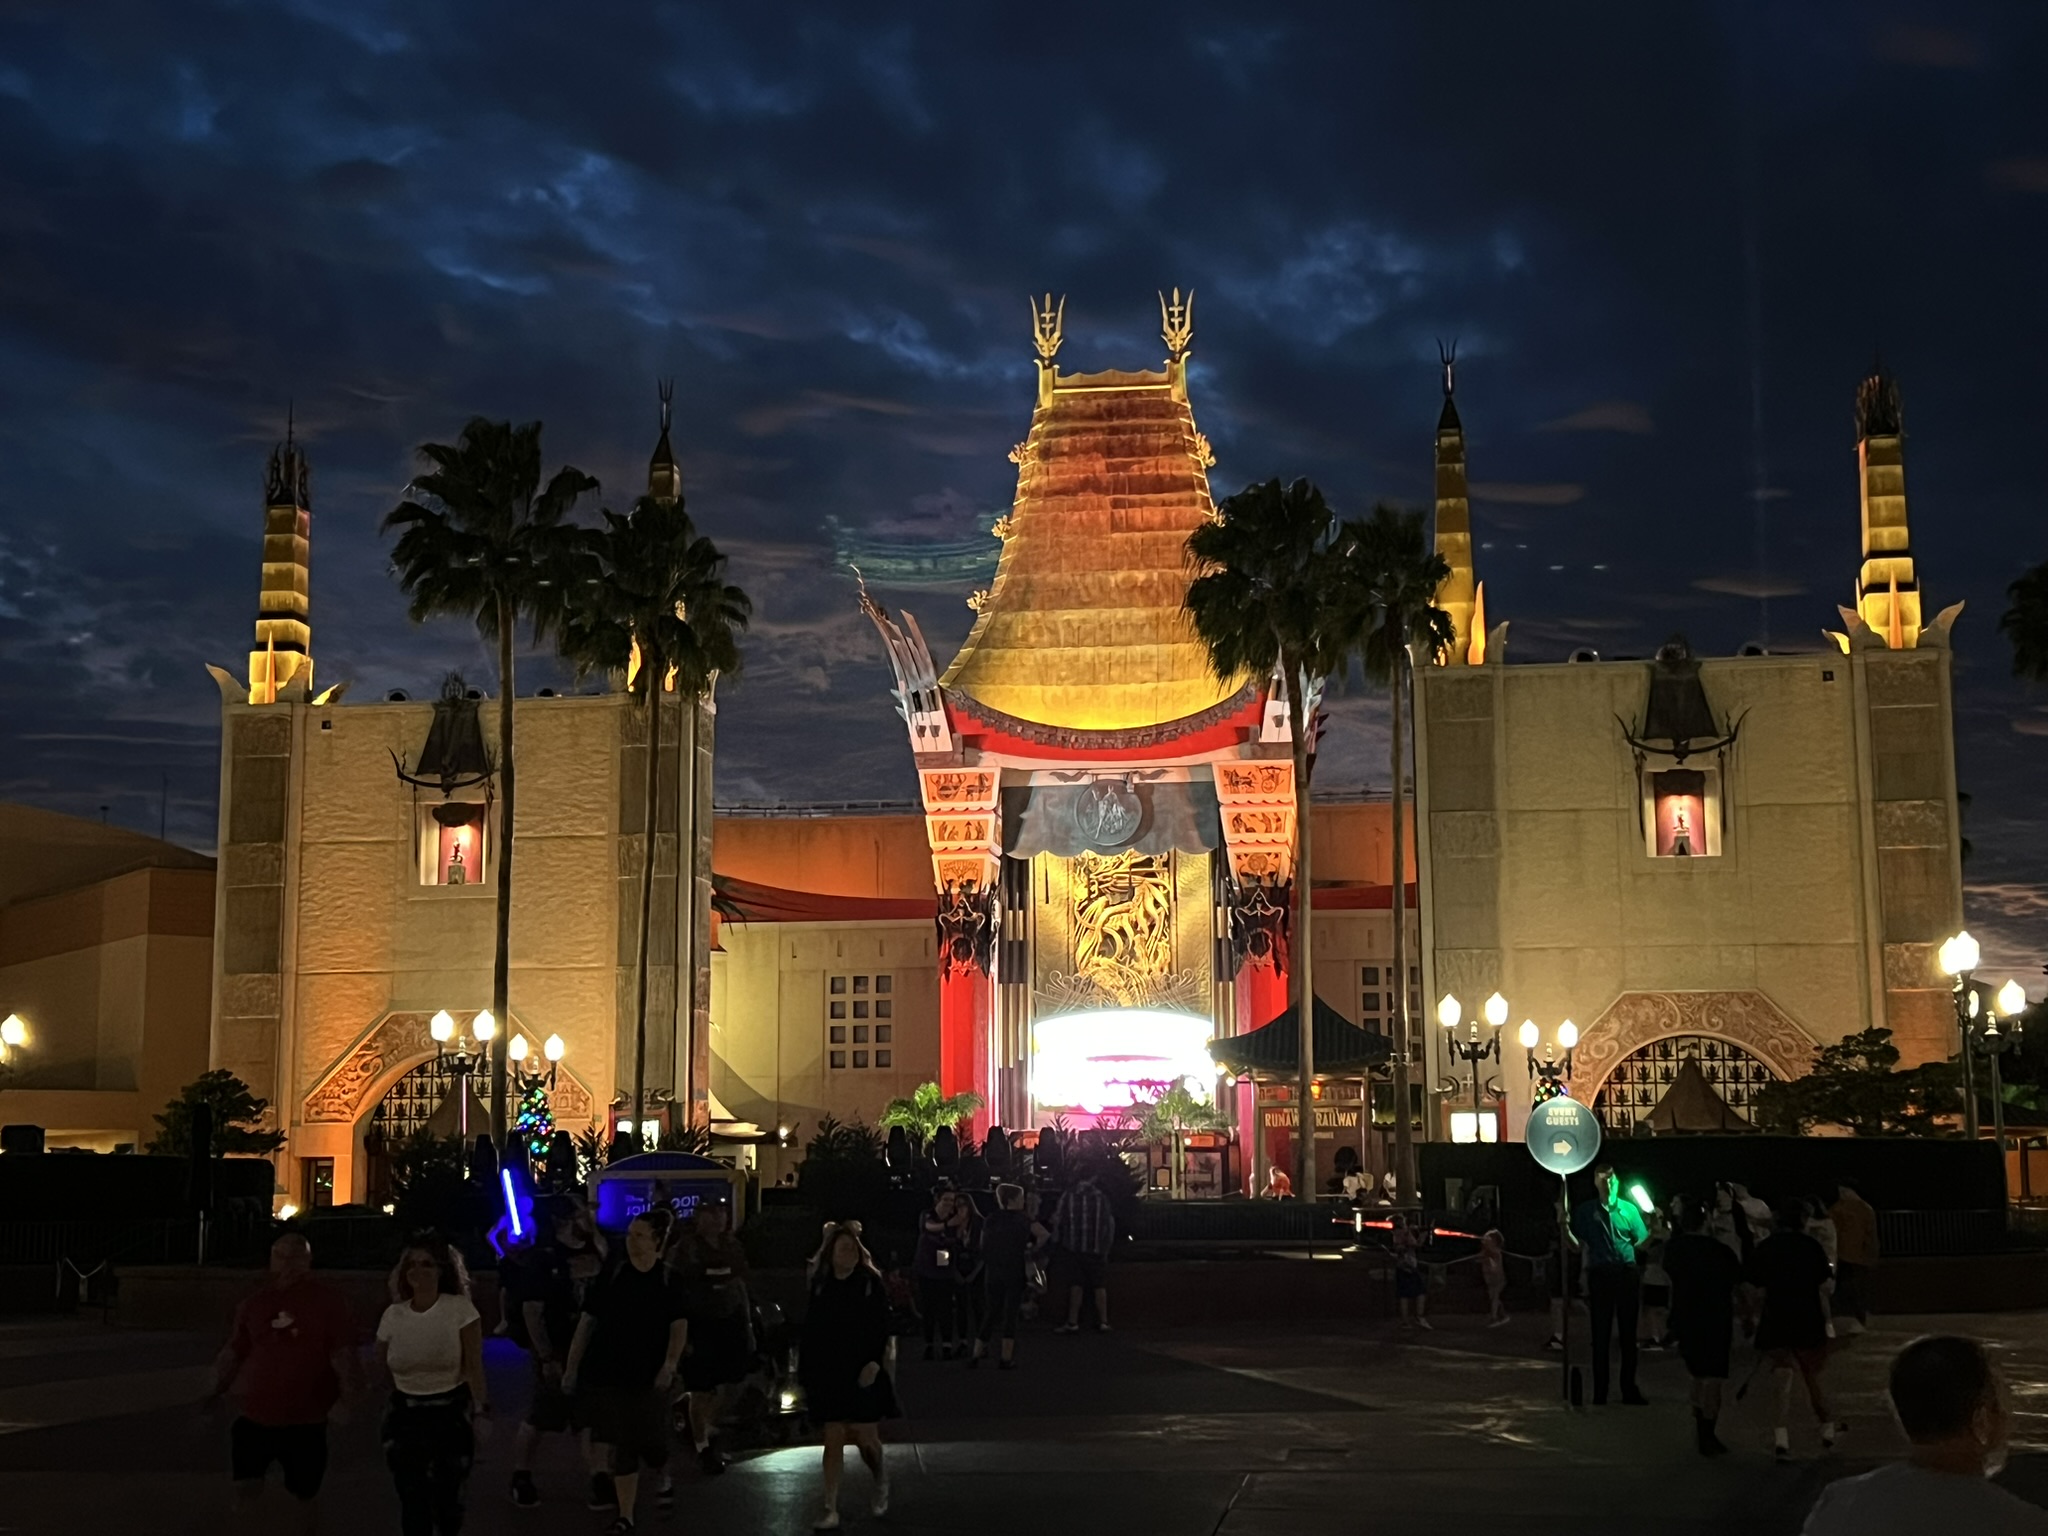 Theme Parks – Christmas Holidays at Disney Hollywood Studios and Wonderful World of Animation Show